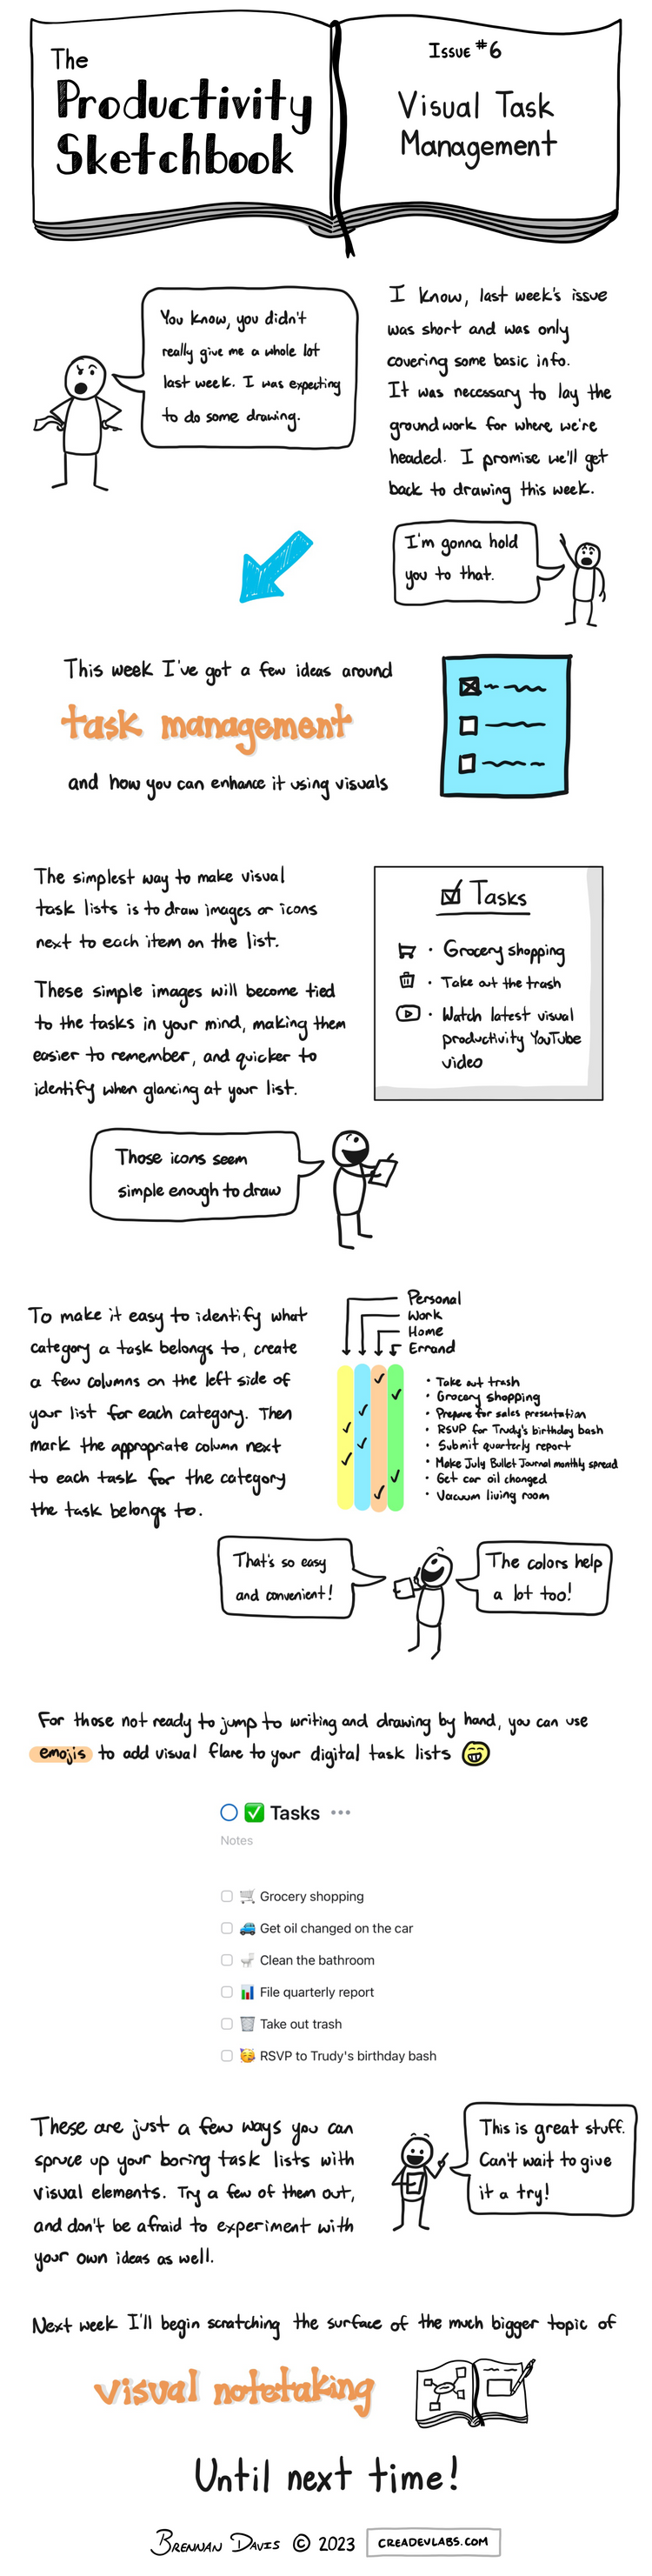 The Productivity Sketchbook #6: Visual Task Management